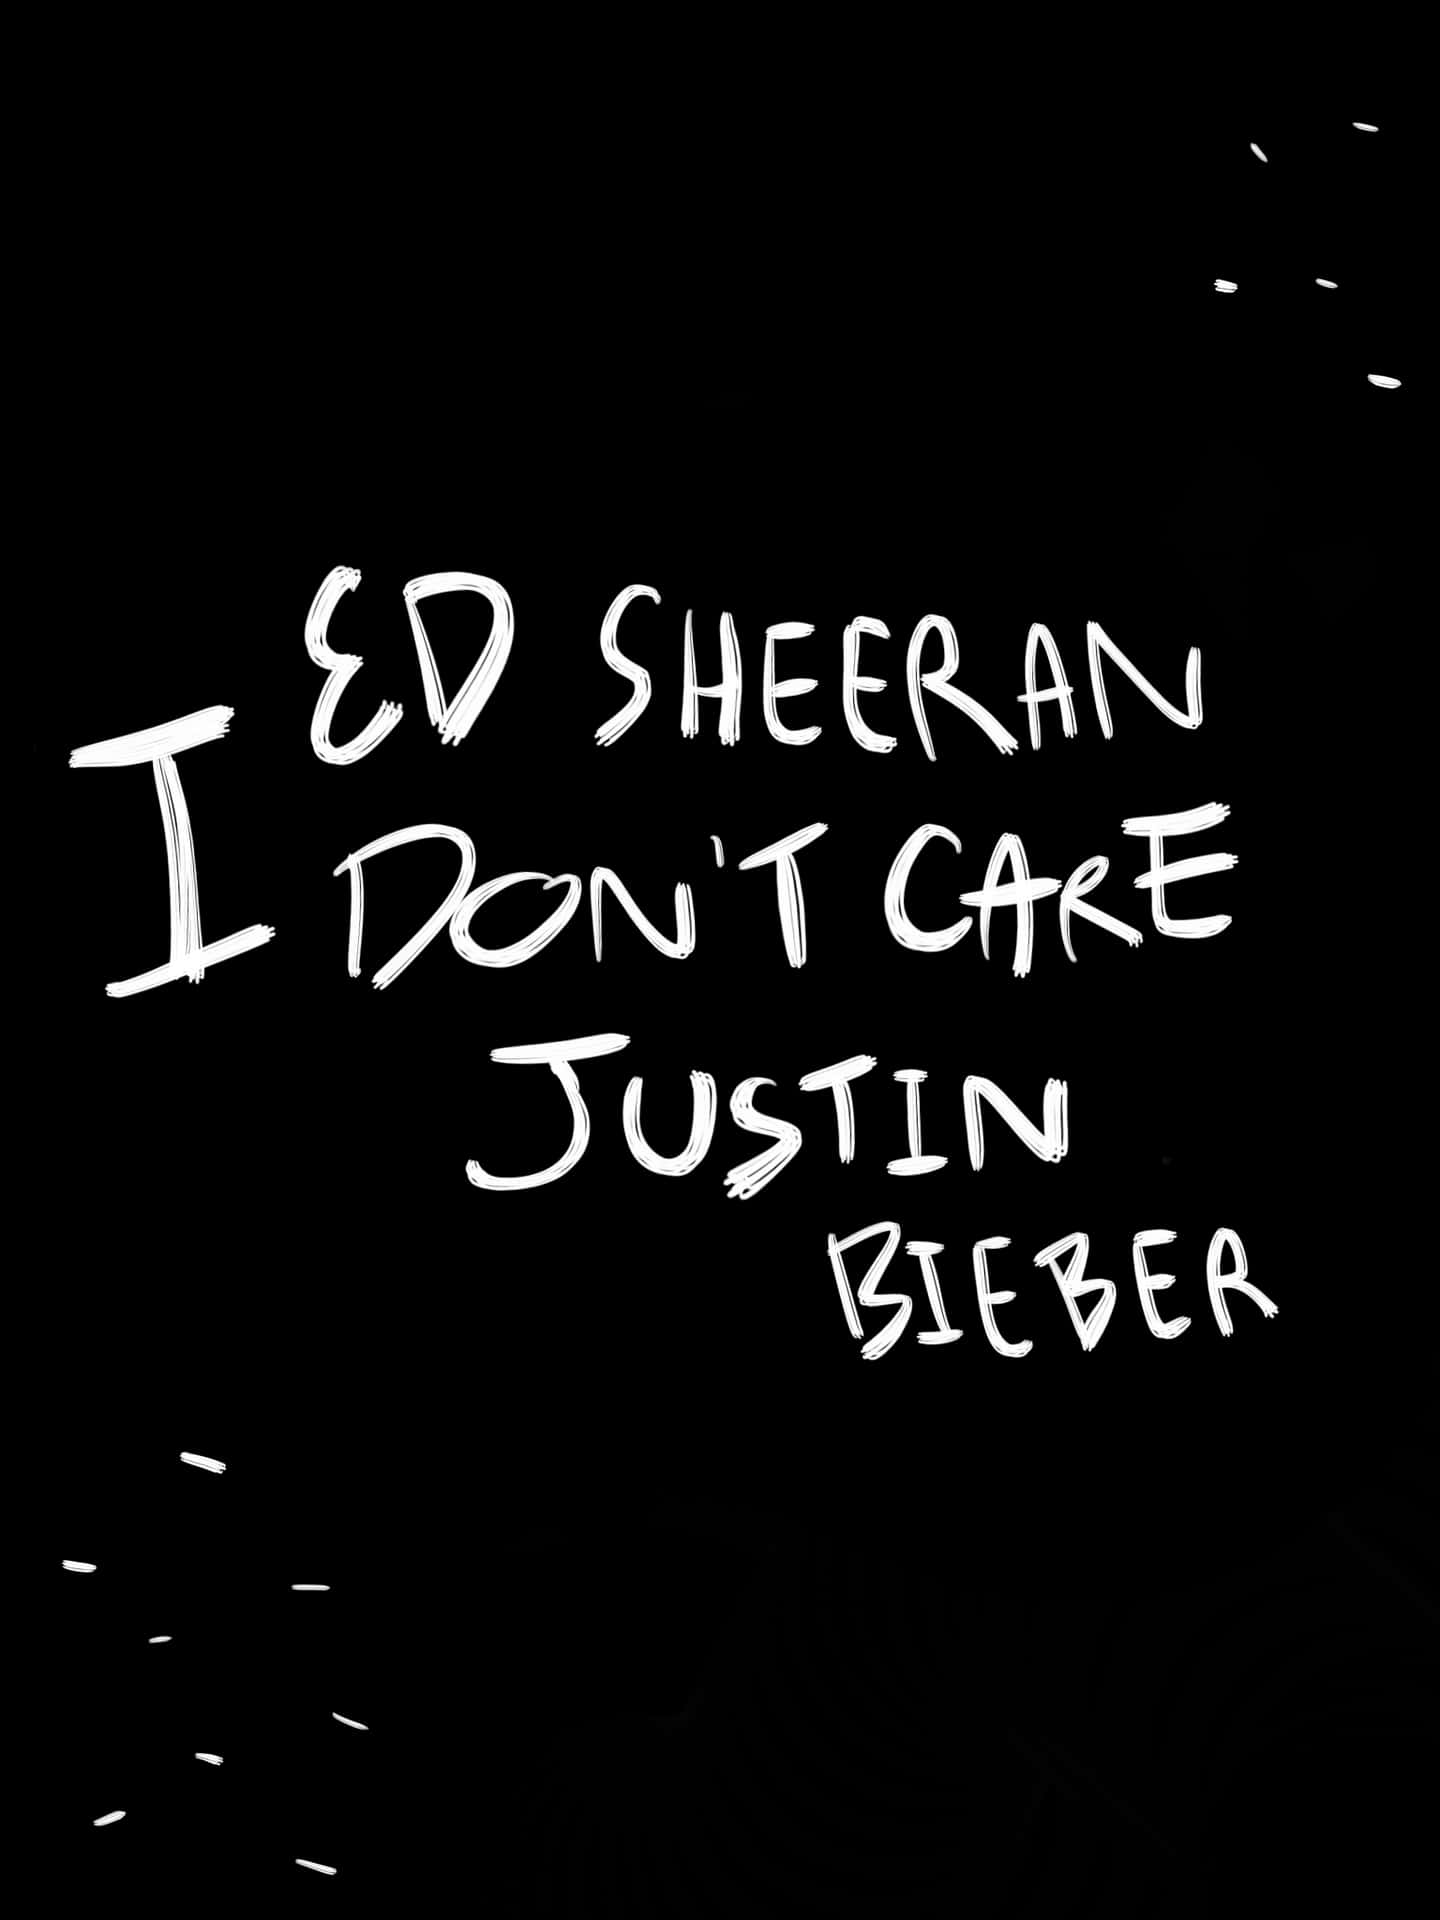 Ed Sheeran I Don't Care Justin Bieber - Ad Wallpaper